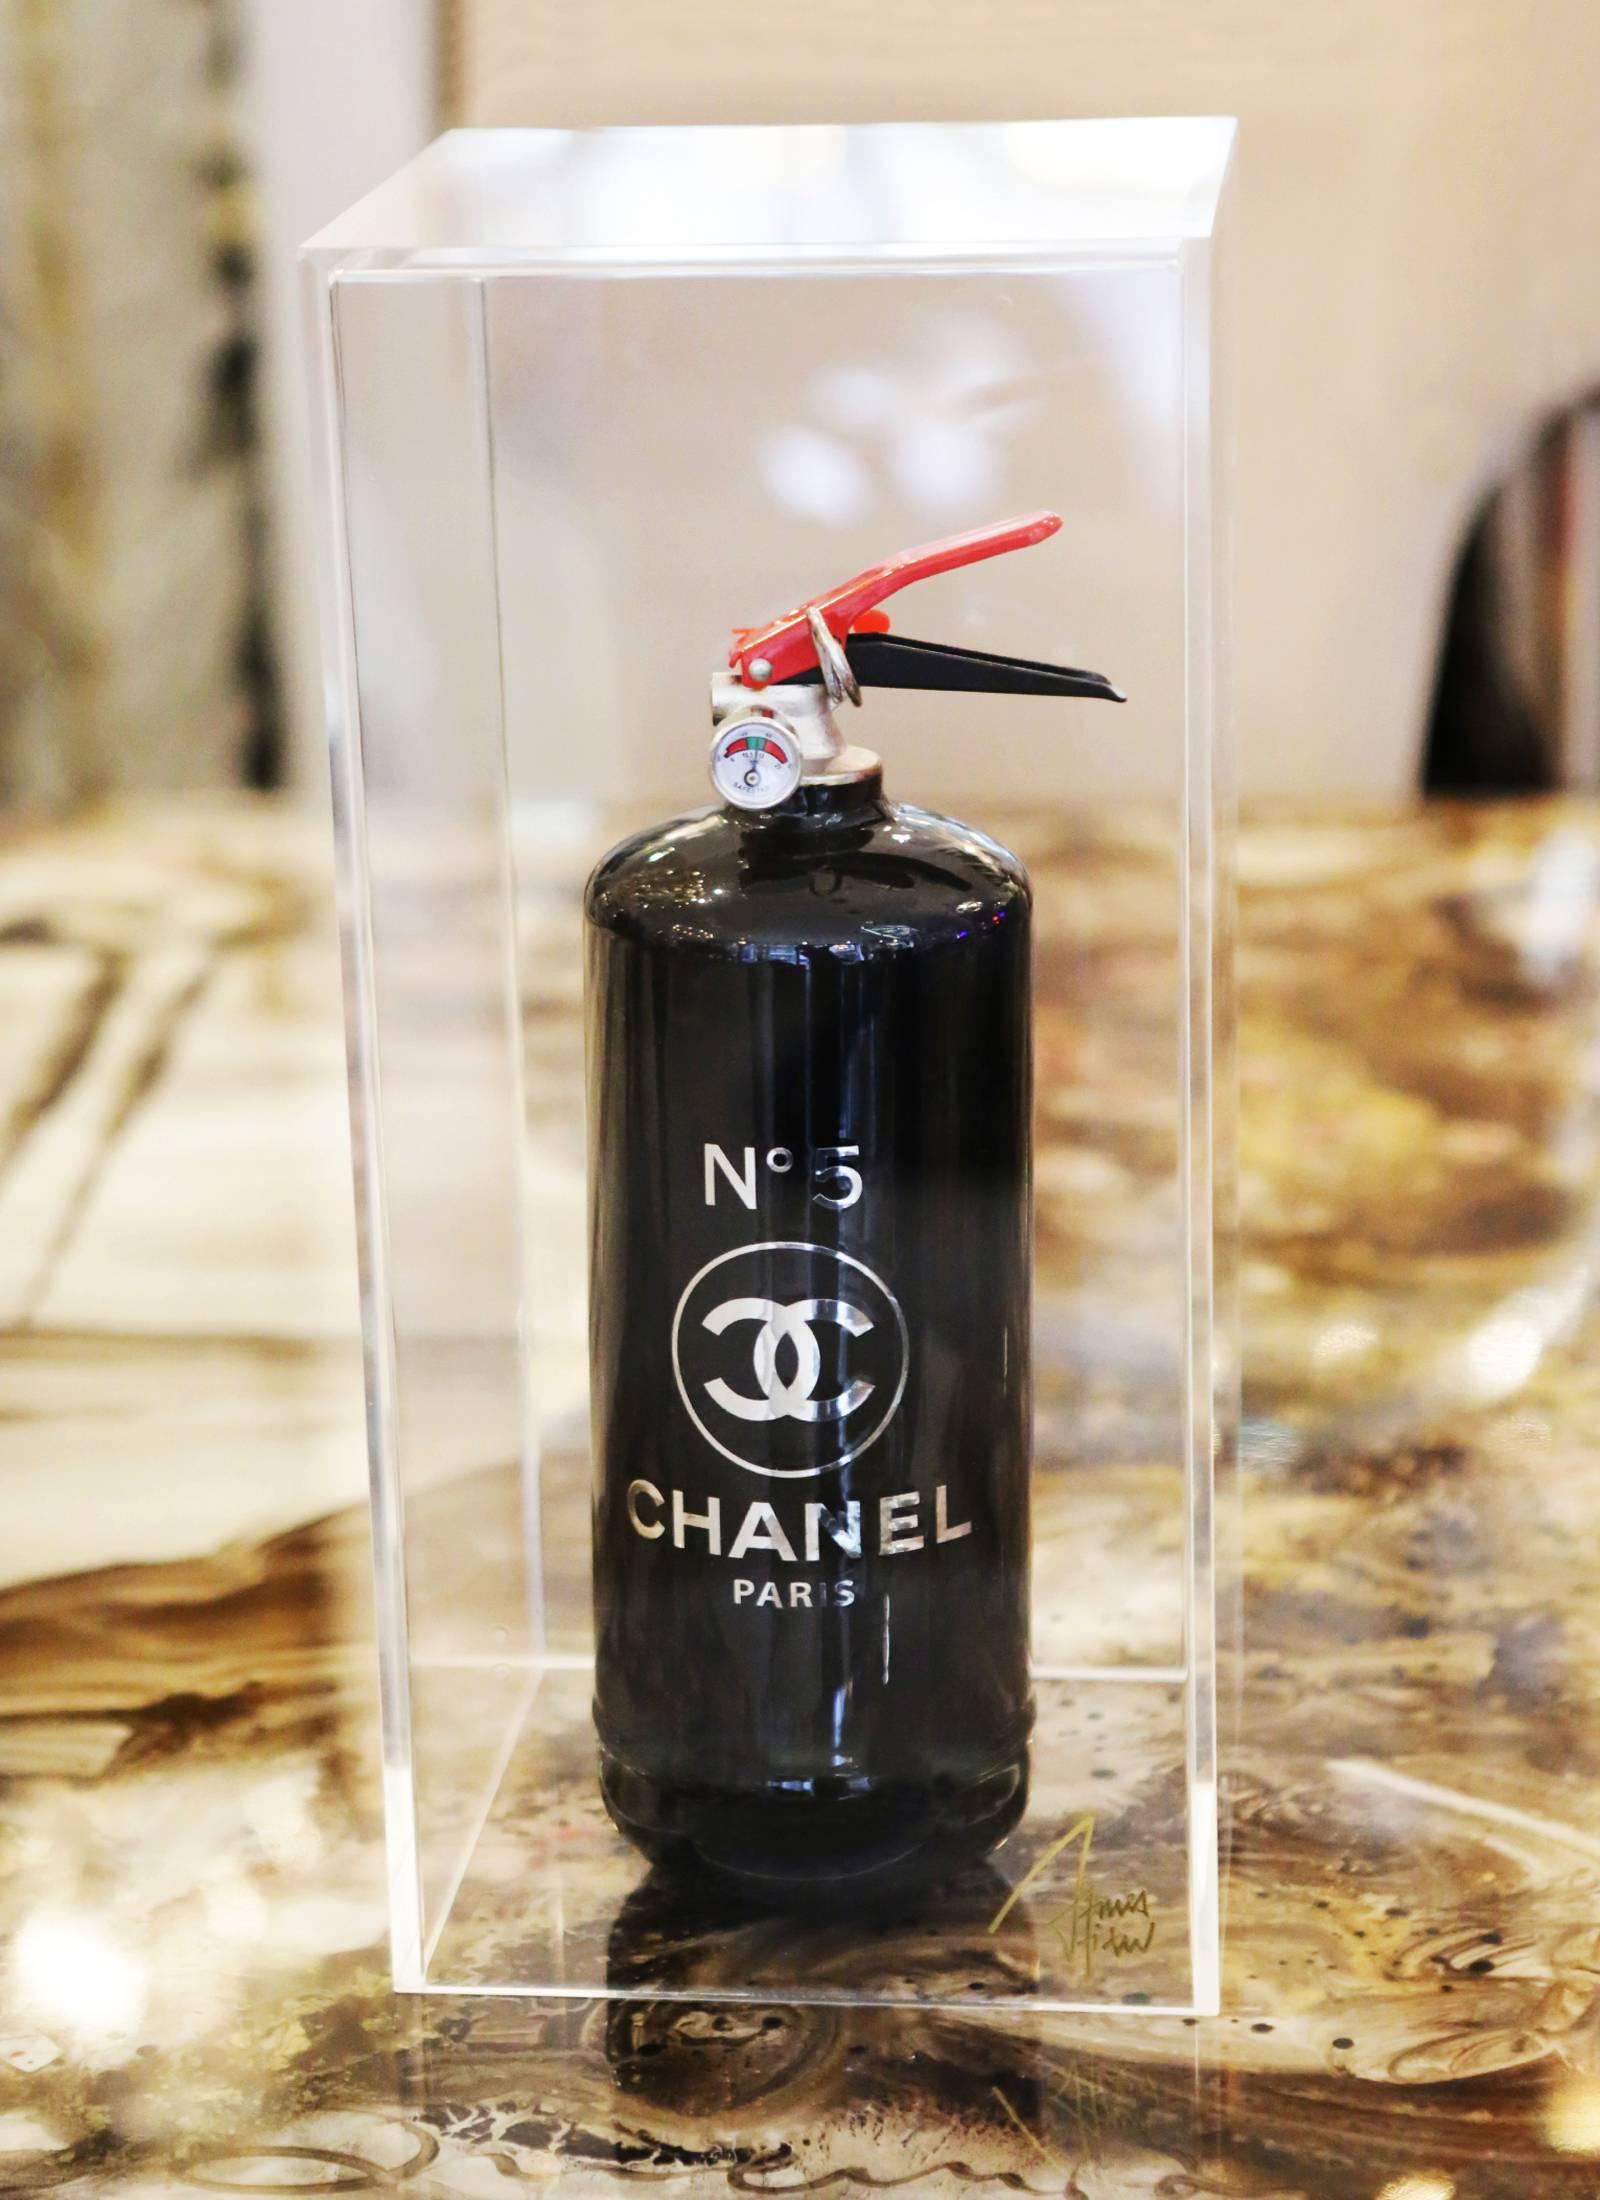 Extinguisher Chanel N°5 black edition Glossy. 
Limited edition of 16 pieces. Exceptional piece. 
Under plexiglass box.
Box: L 20 x D 20 x H 42.5cm.
Extinguisher: L 10.5 x D 10.5 x H 35.5cm.
 